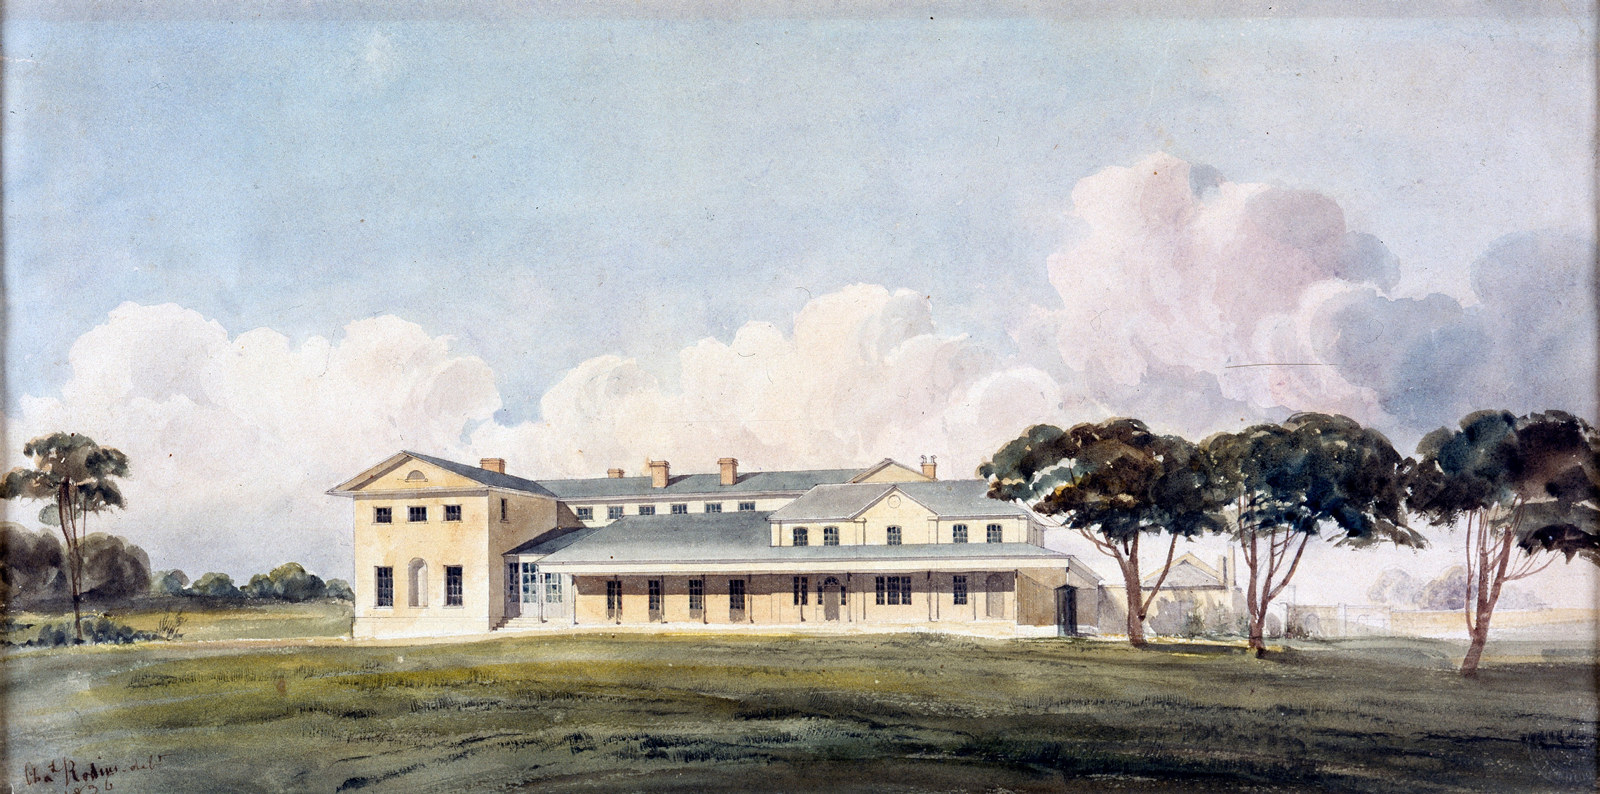 Watercolour of colonial era building in landscape.